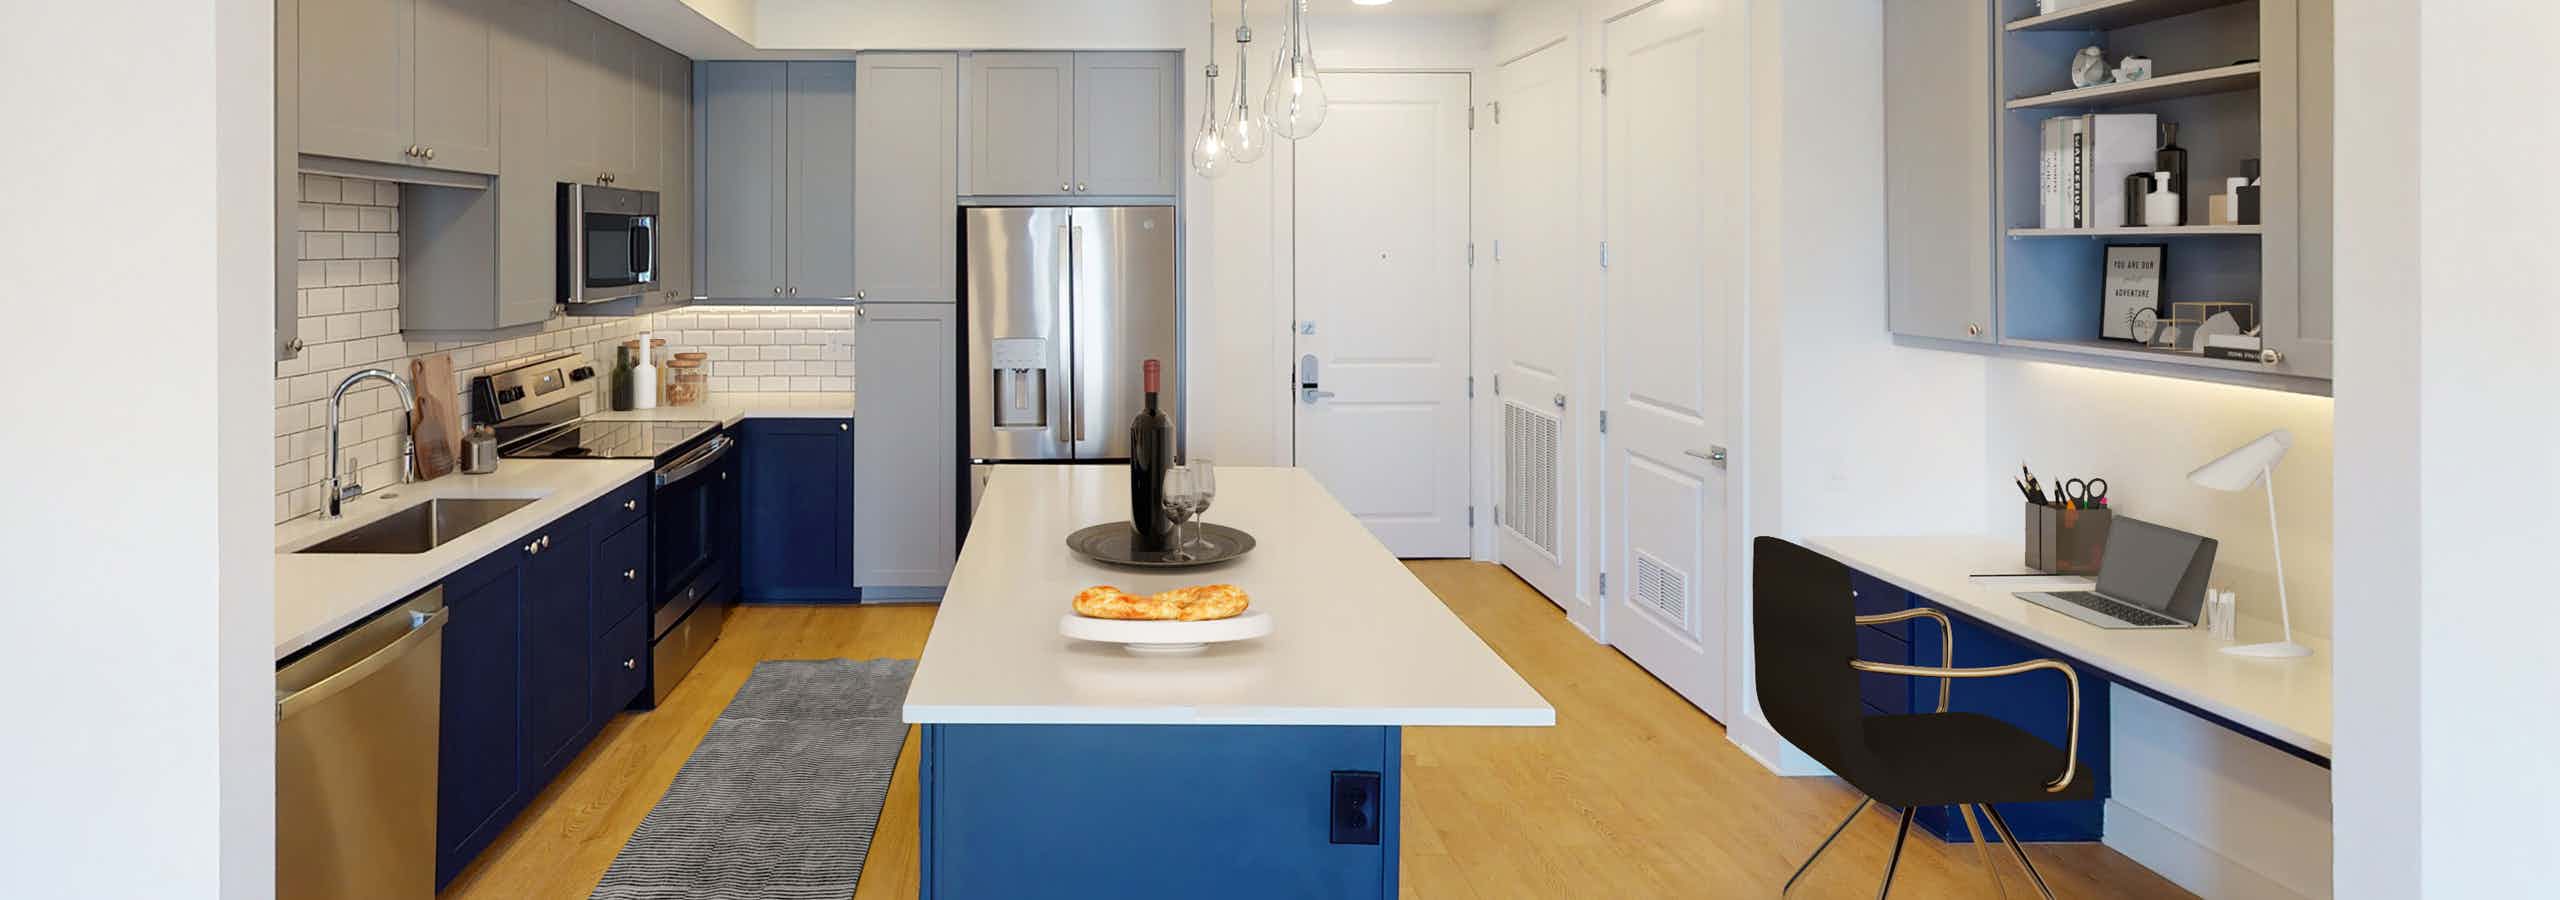 Island kitchen with built-in desk & quartz countertops